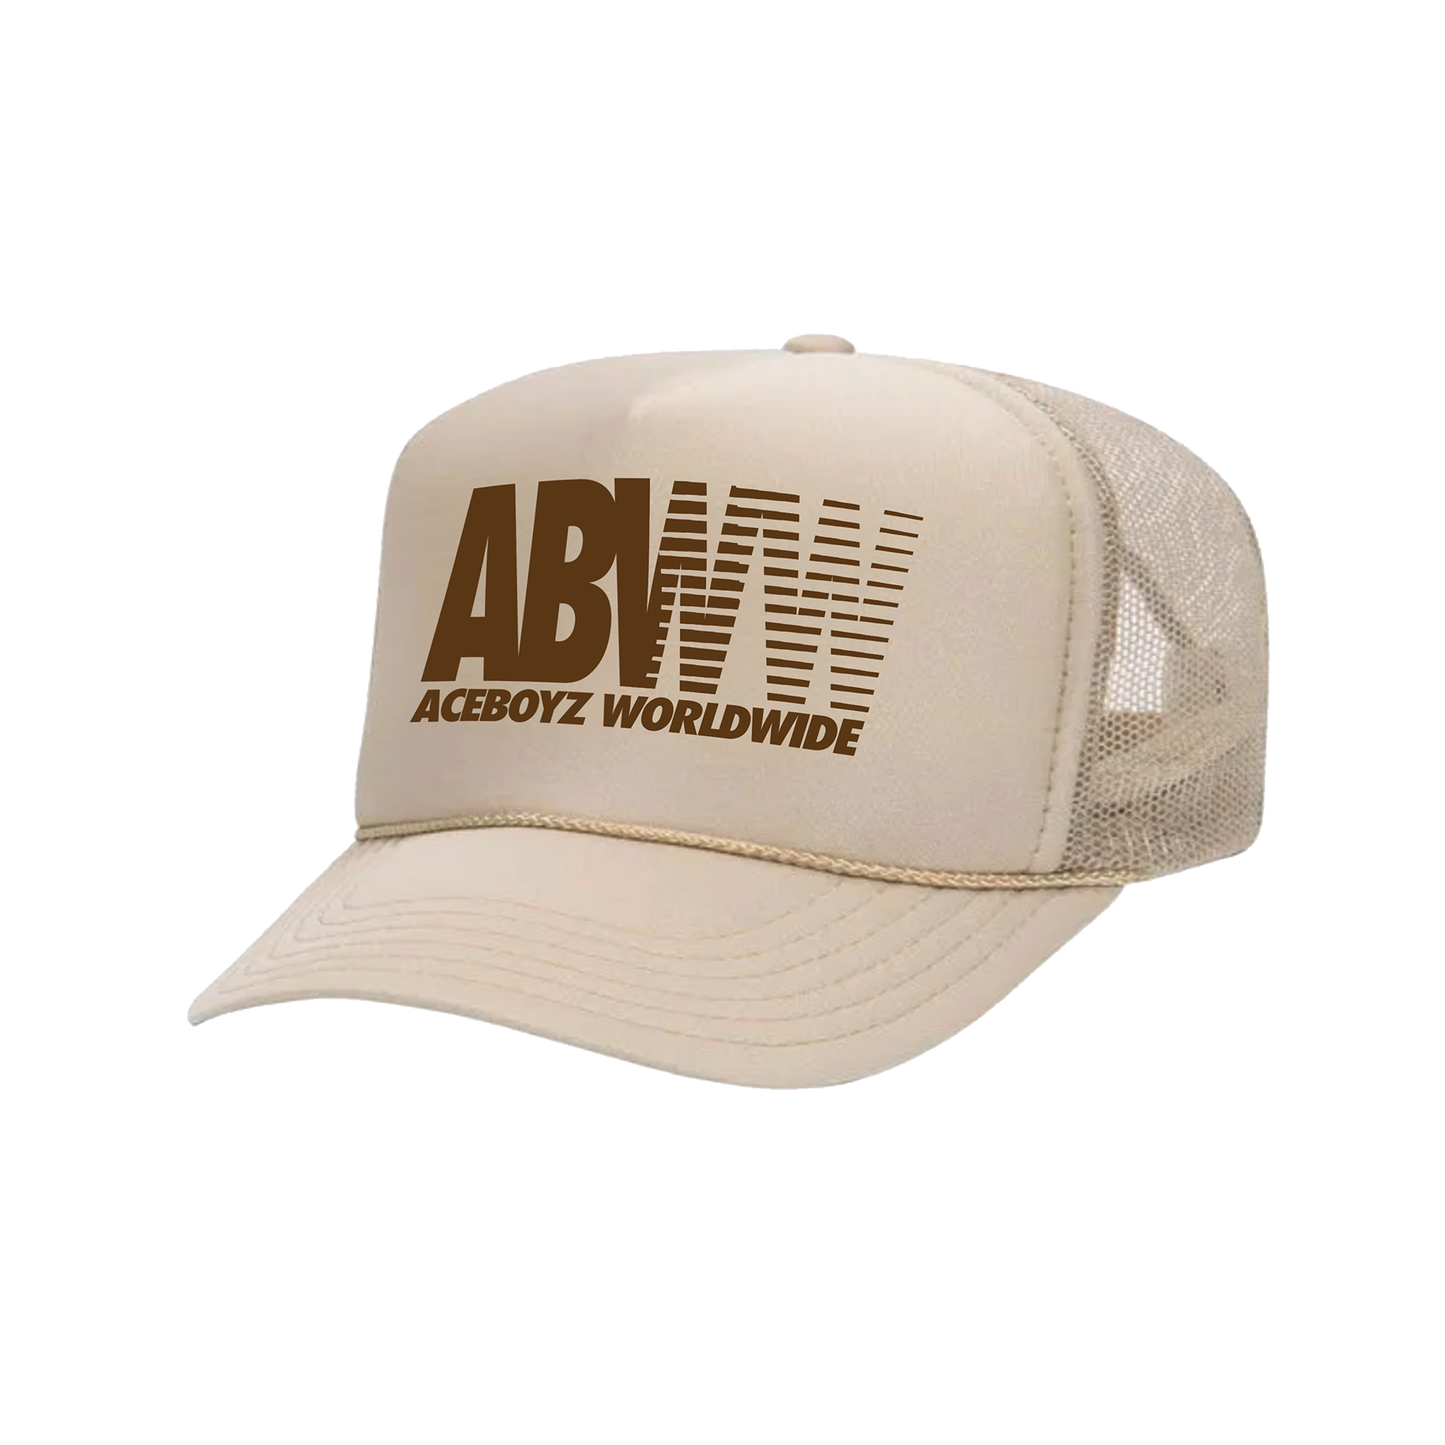 ABW TRADITION FOAM TRUCKER HAT - CREAM